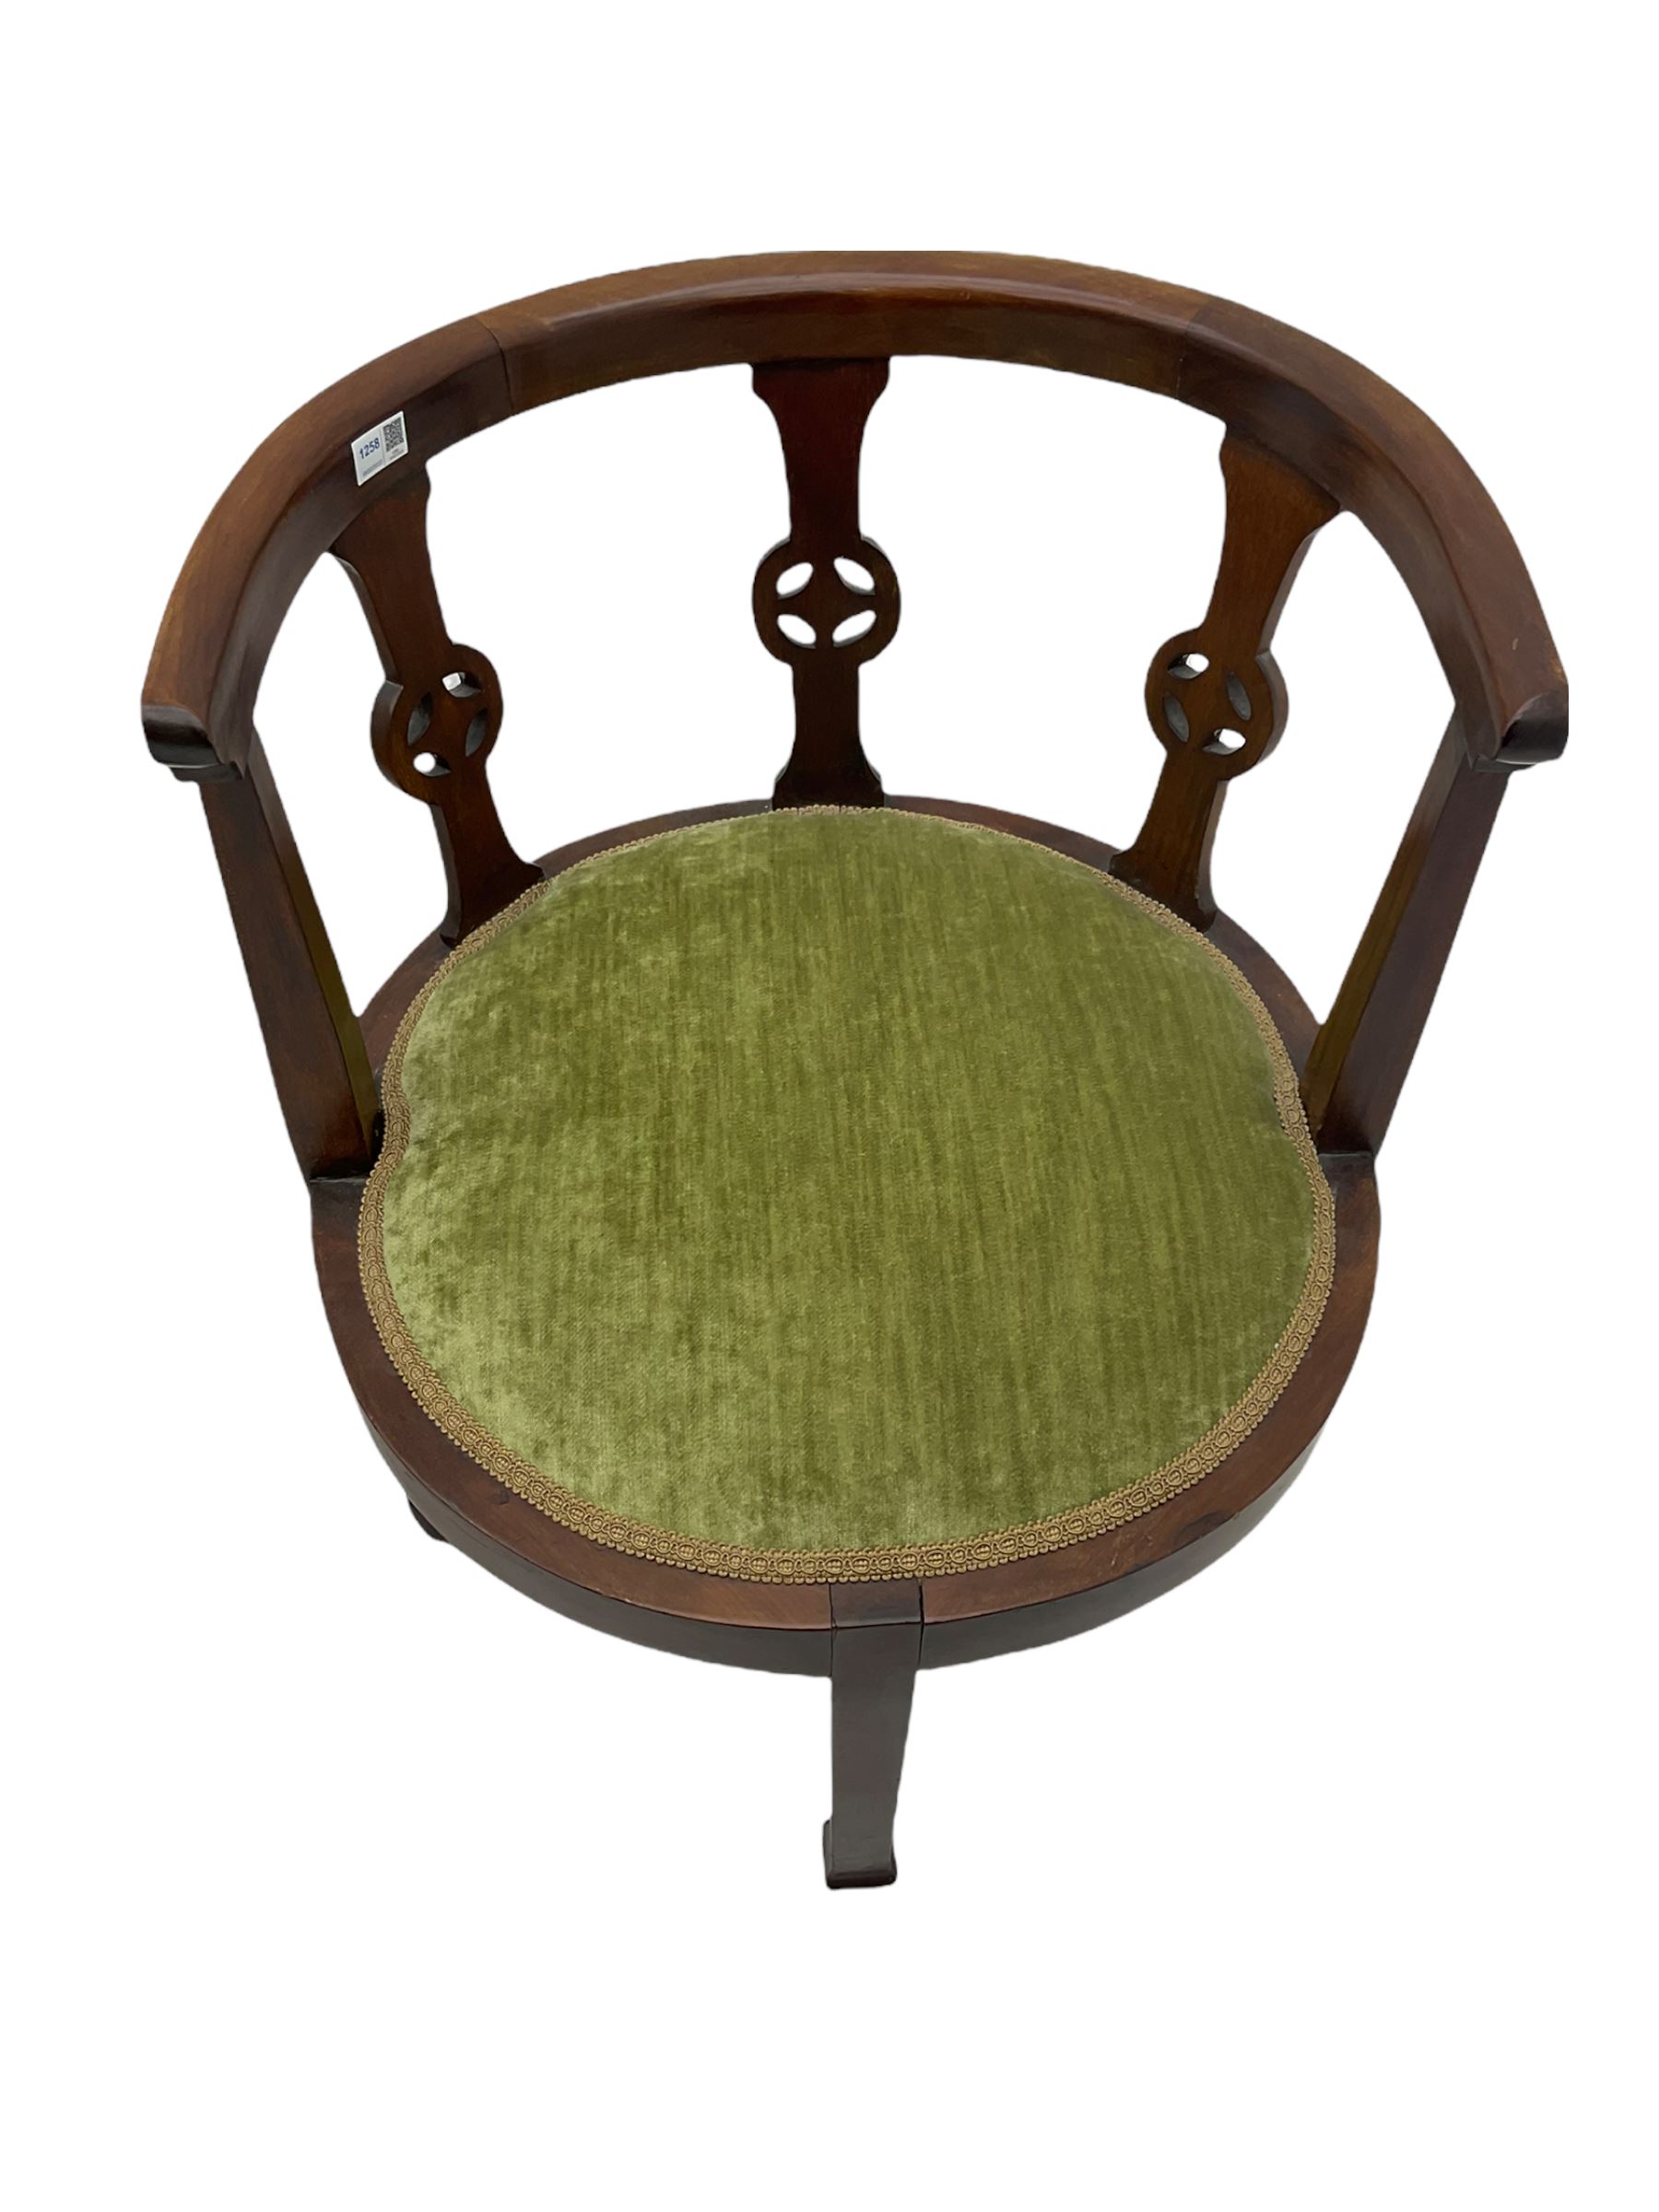 Pair of Edwardian mahogany tub shaped chairs - Image 7 of 8